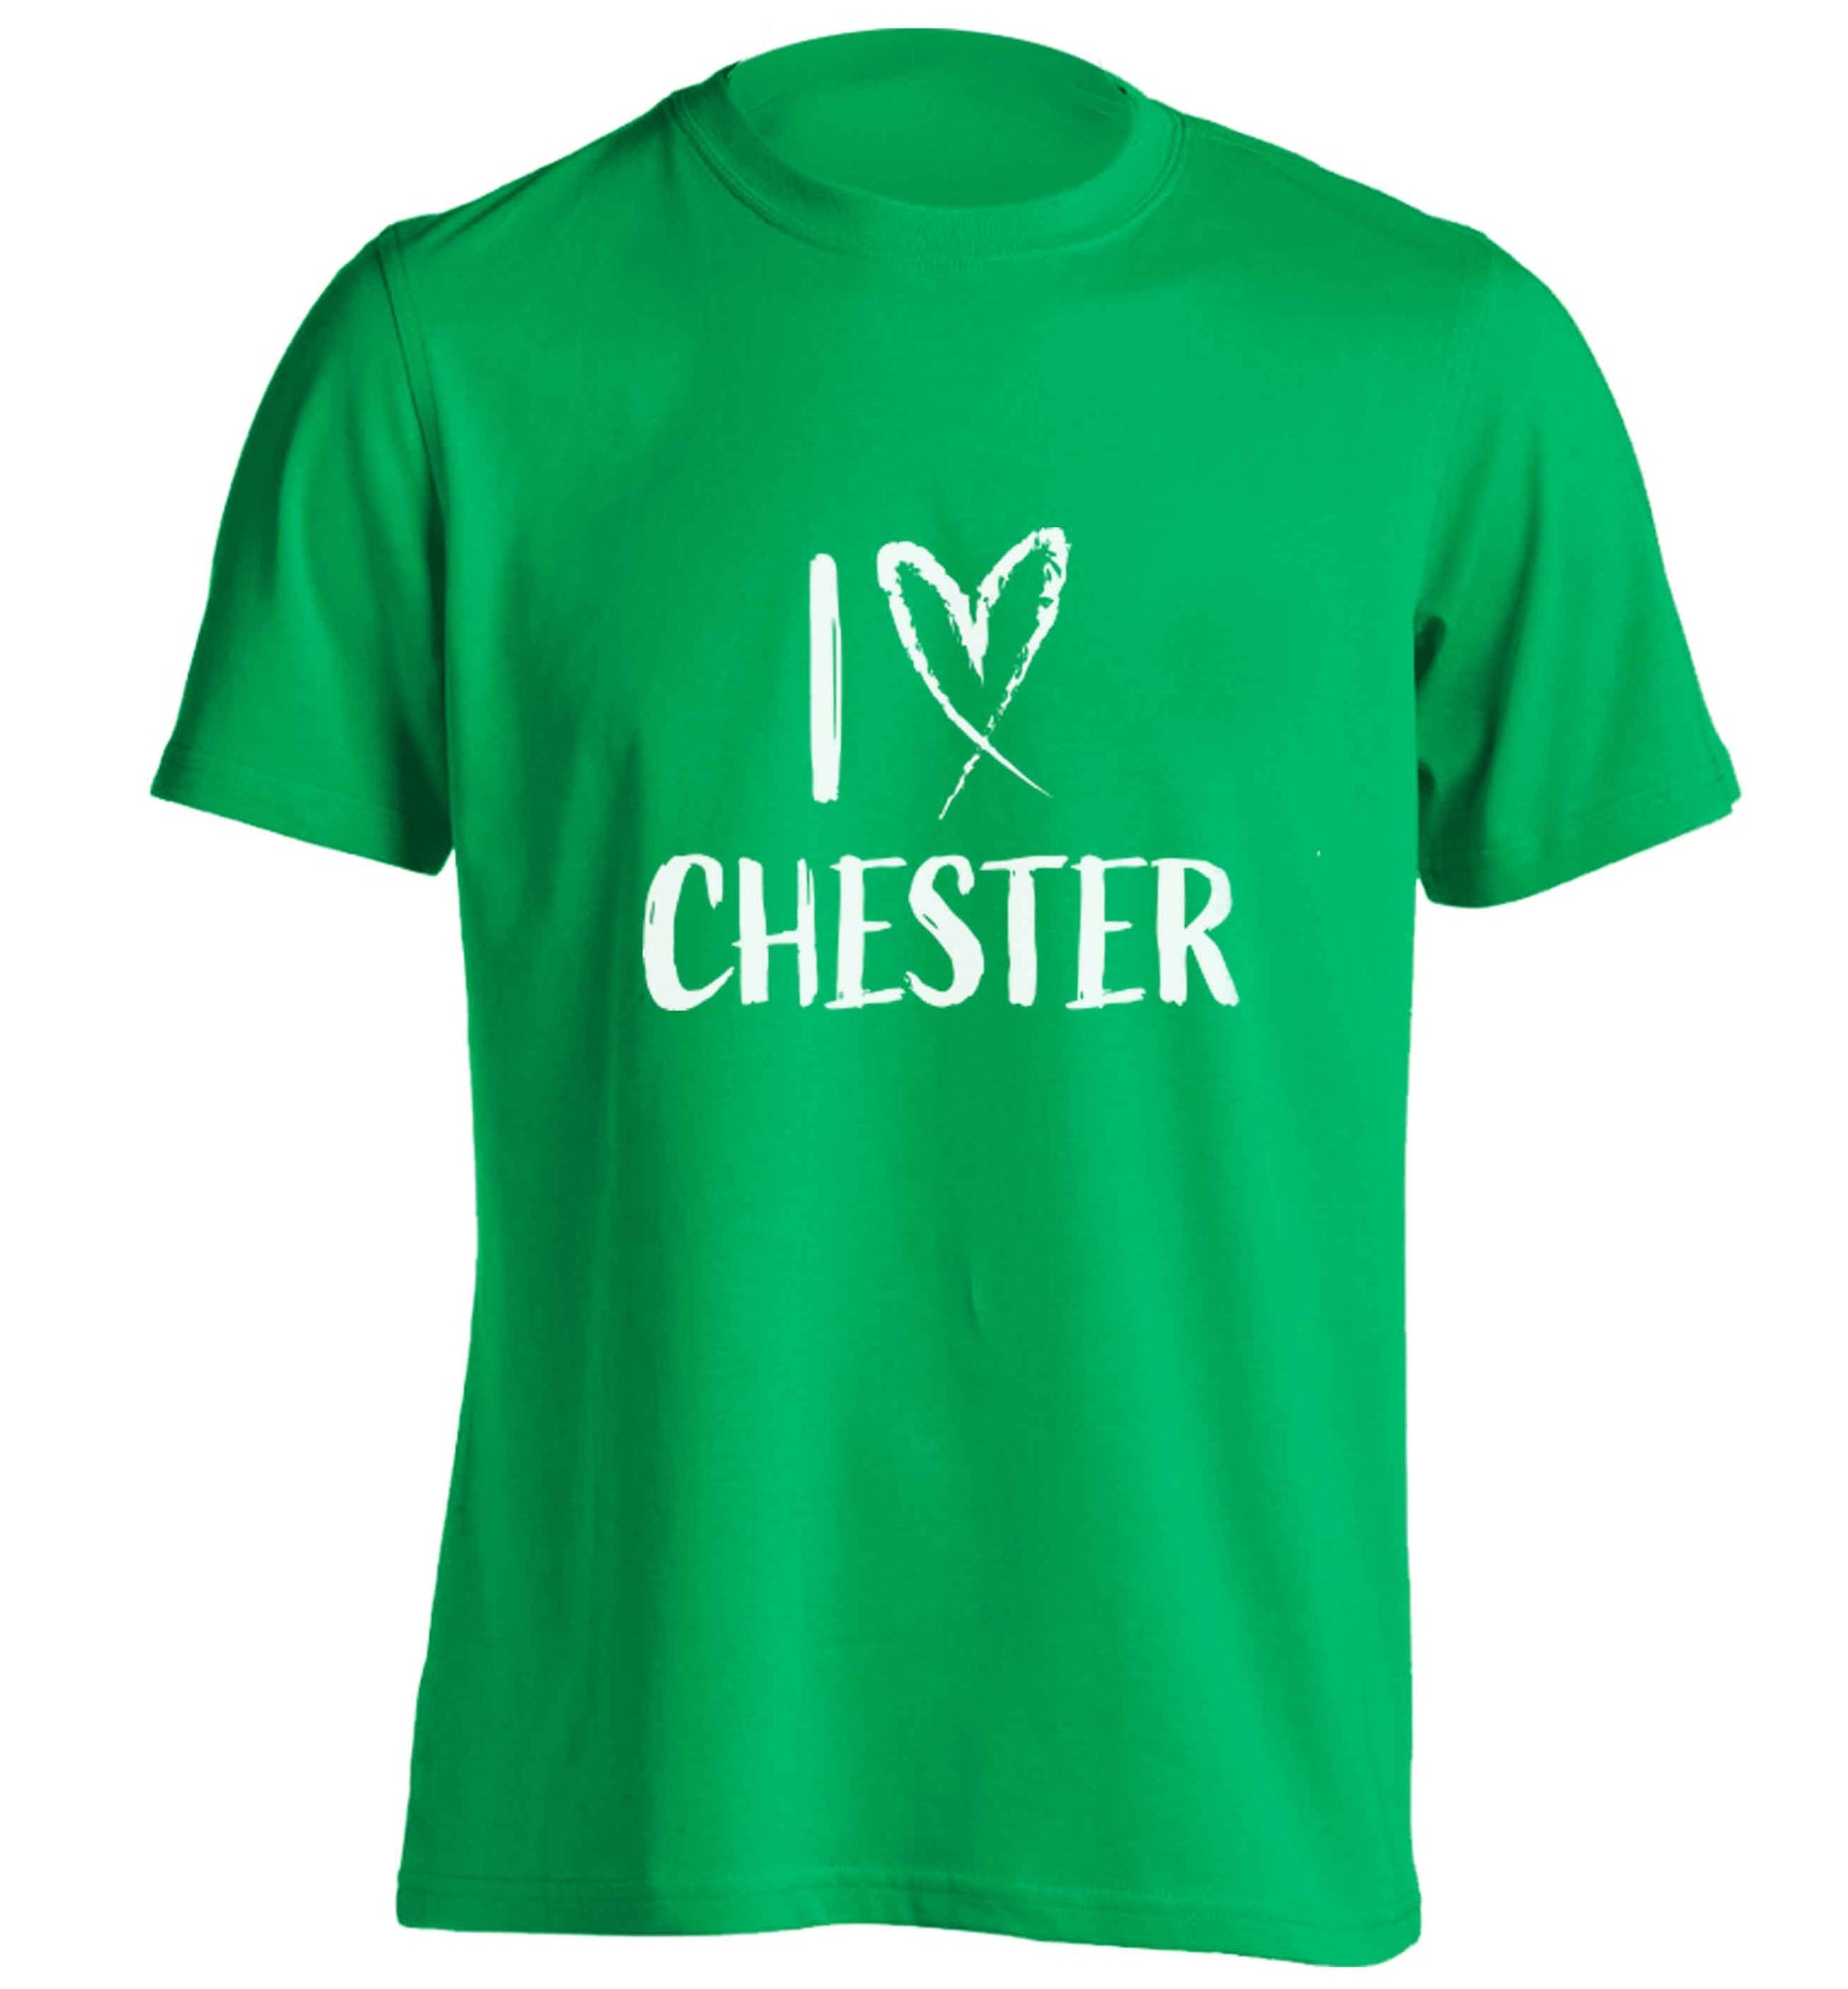 I love Chester adults unisex green Tshirt 2XL